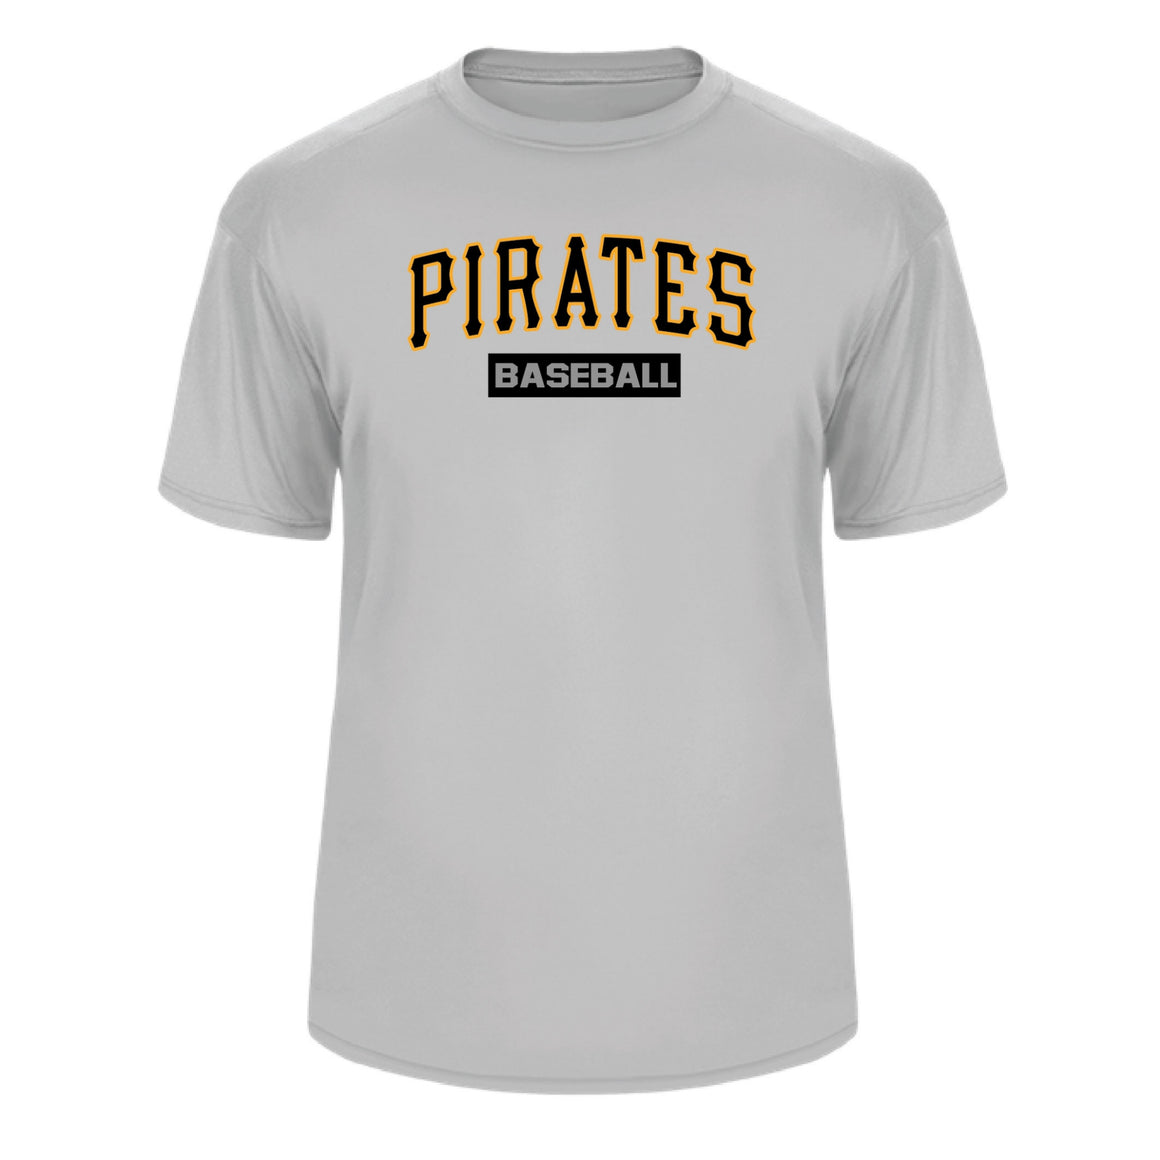 Men's Pirates Baseball Shirt (Dri-fit or Cotton)